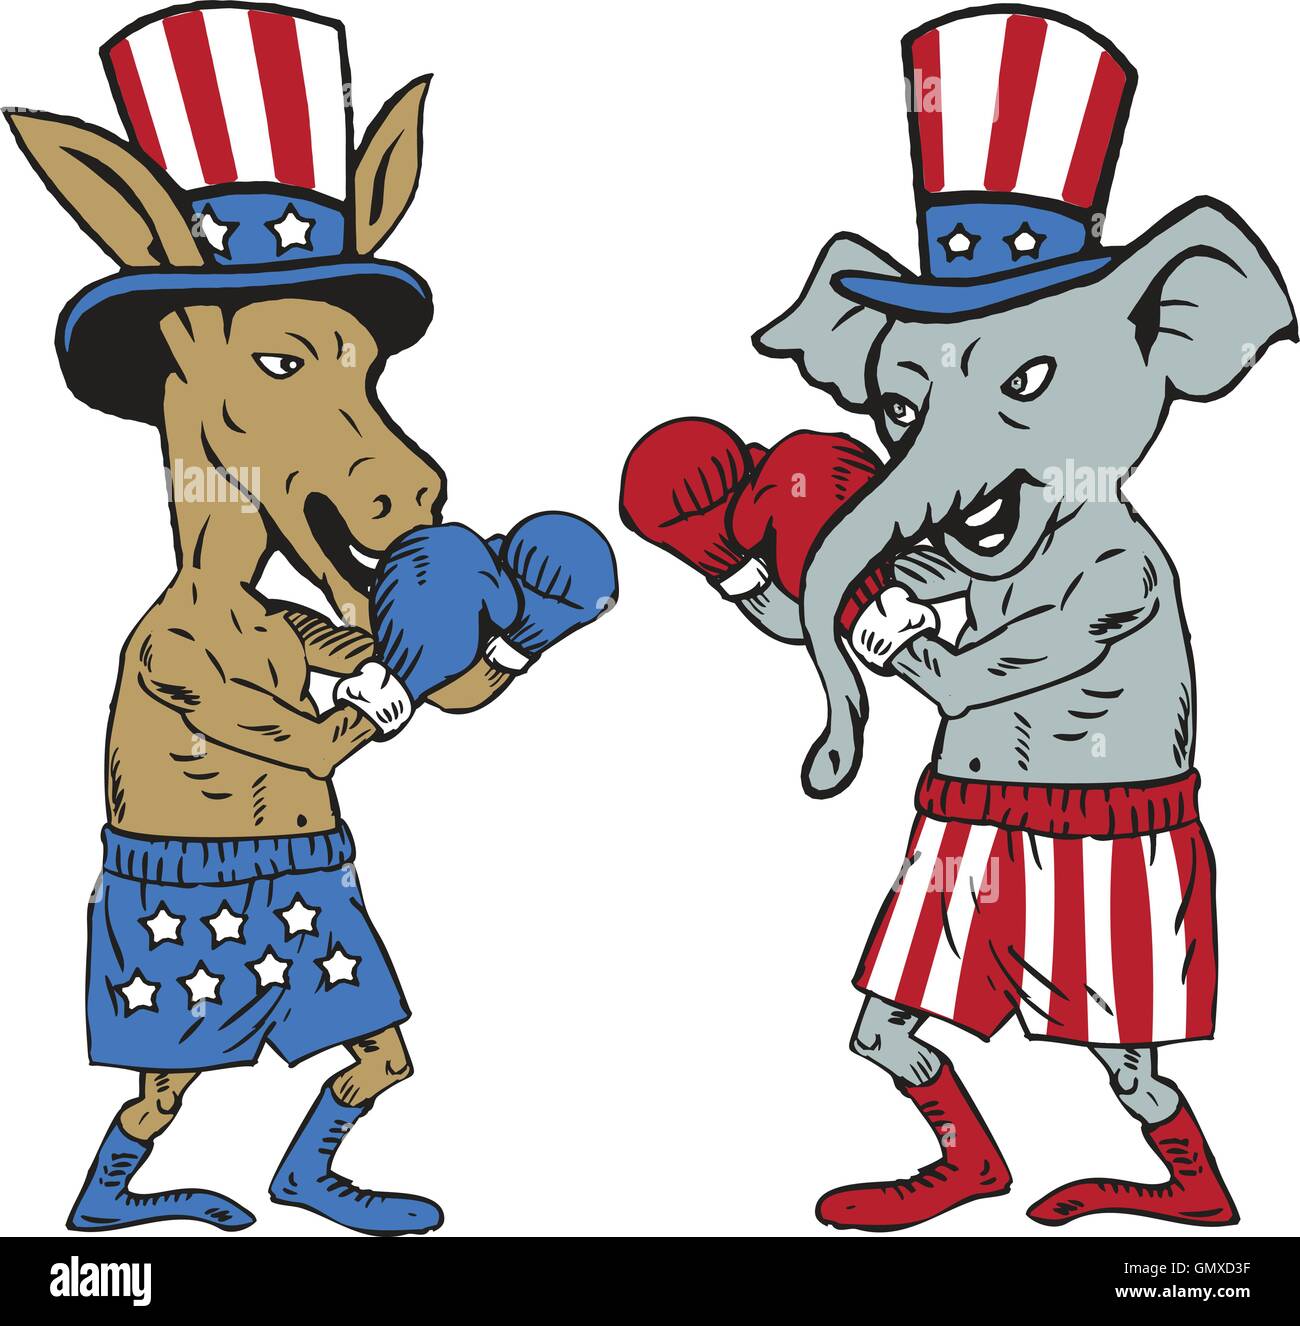 Democrat Donkey Boxer and Republican Elephant Mascot Cartoon Stock Vector